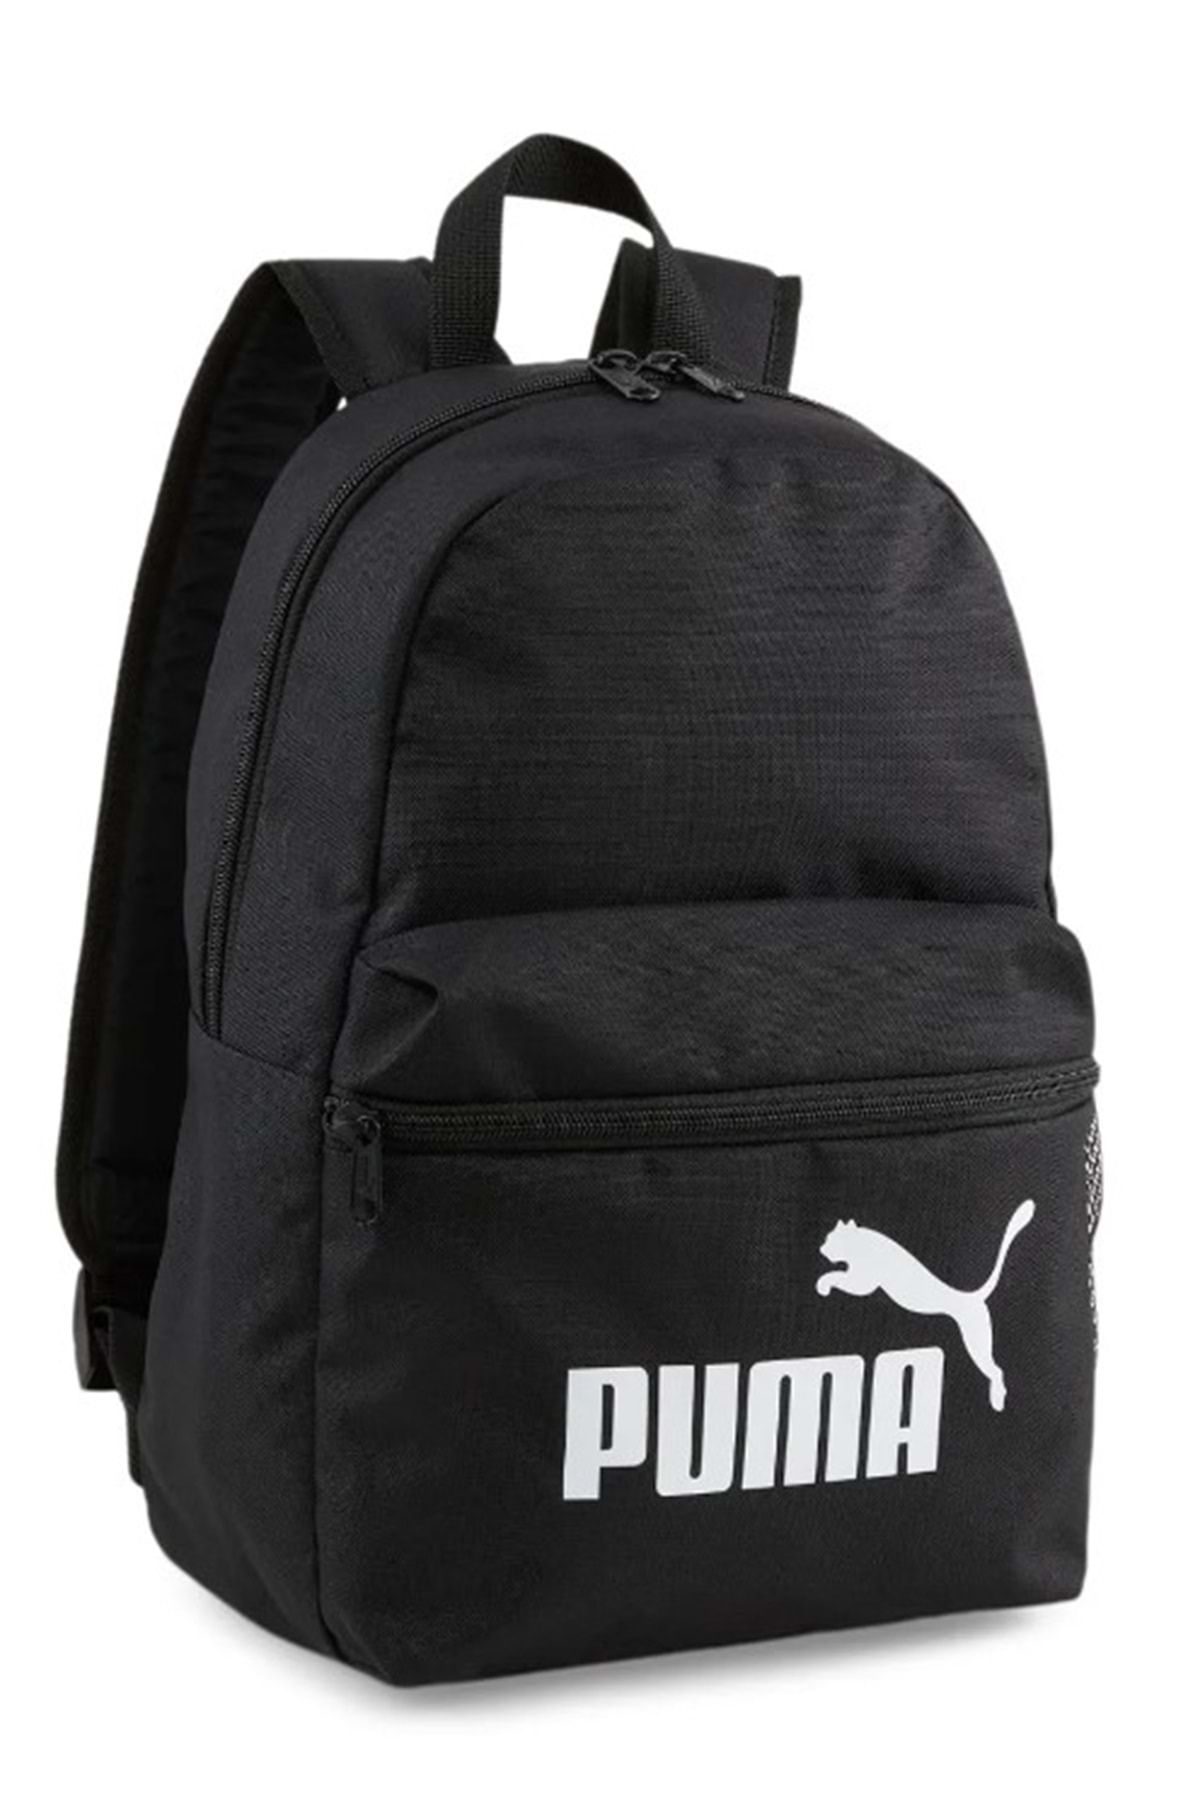 Puma Phase Small Backpack 079879 Kids Çocuk Unisex Sırt Çantası Si?yah